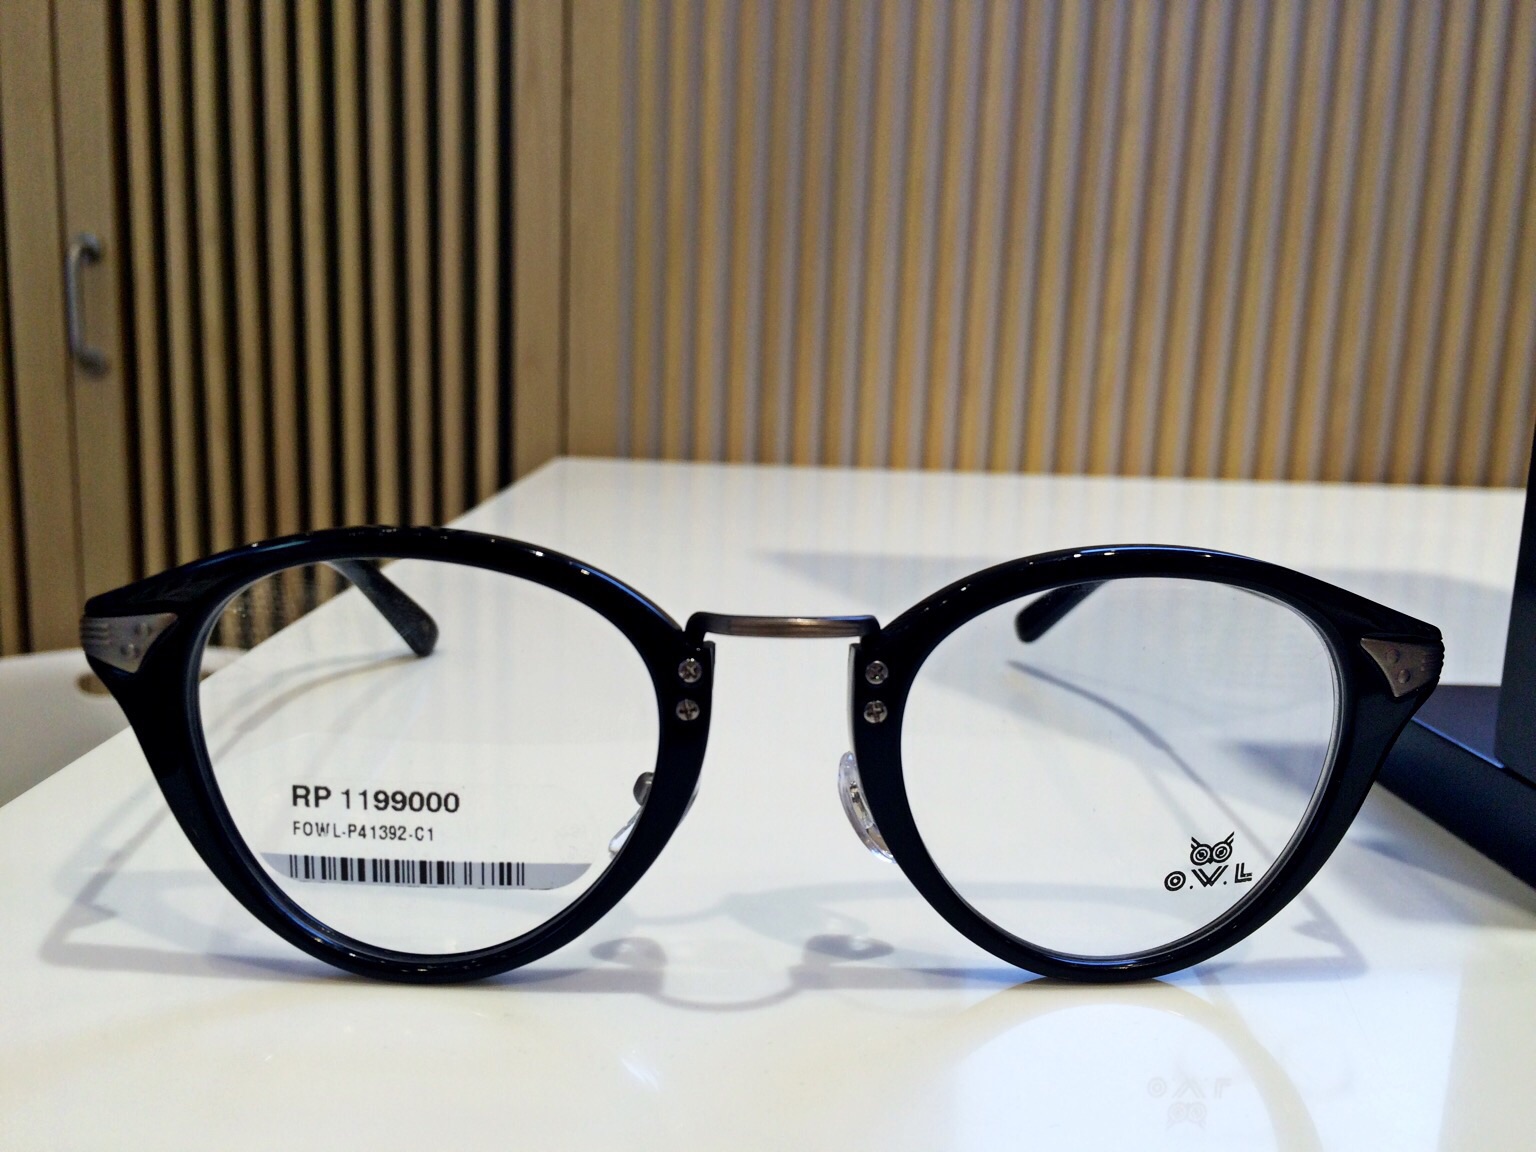 Mencari kacamata gaul  di OWL Irfan Nur Ilman s blog